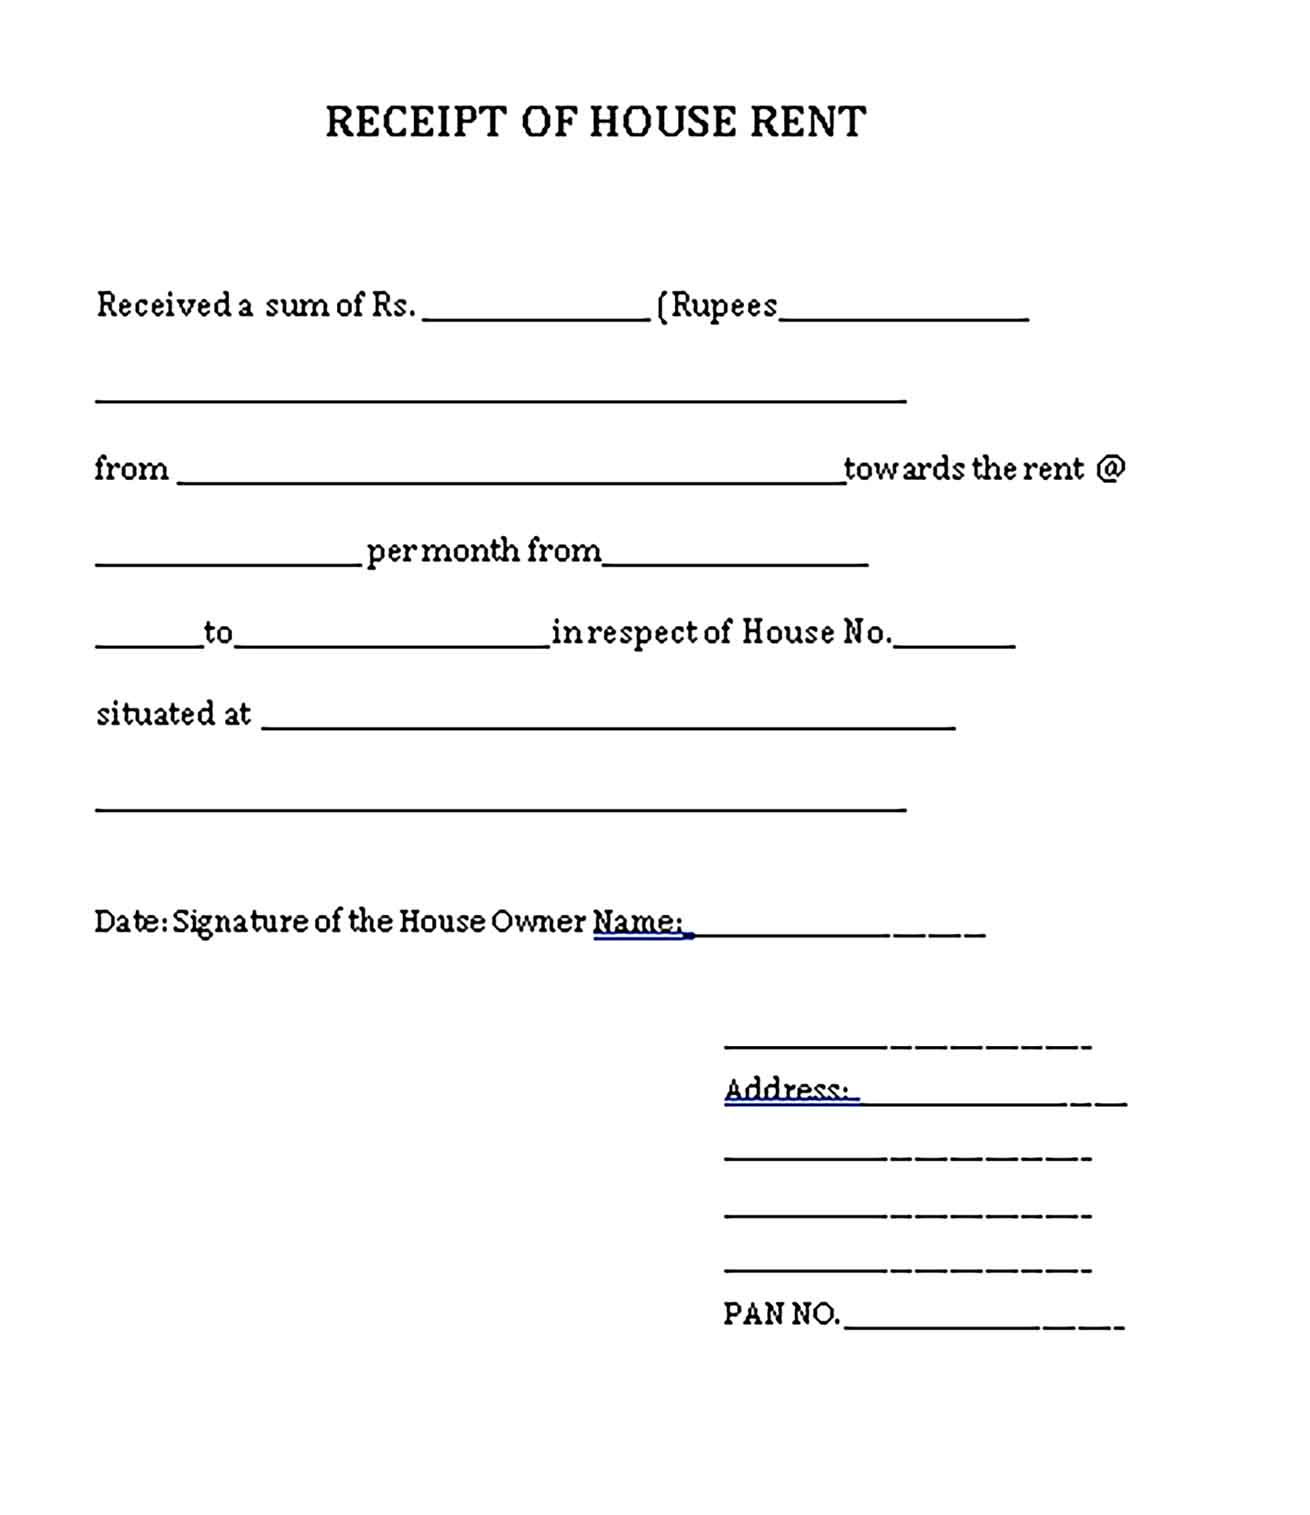 Sample House Rental Receipt 1 Templates